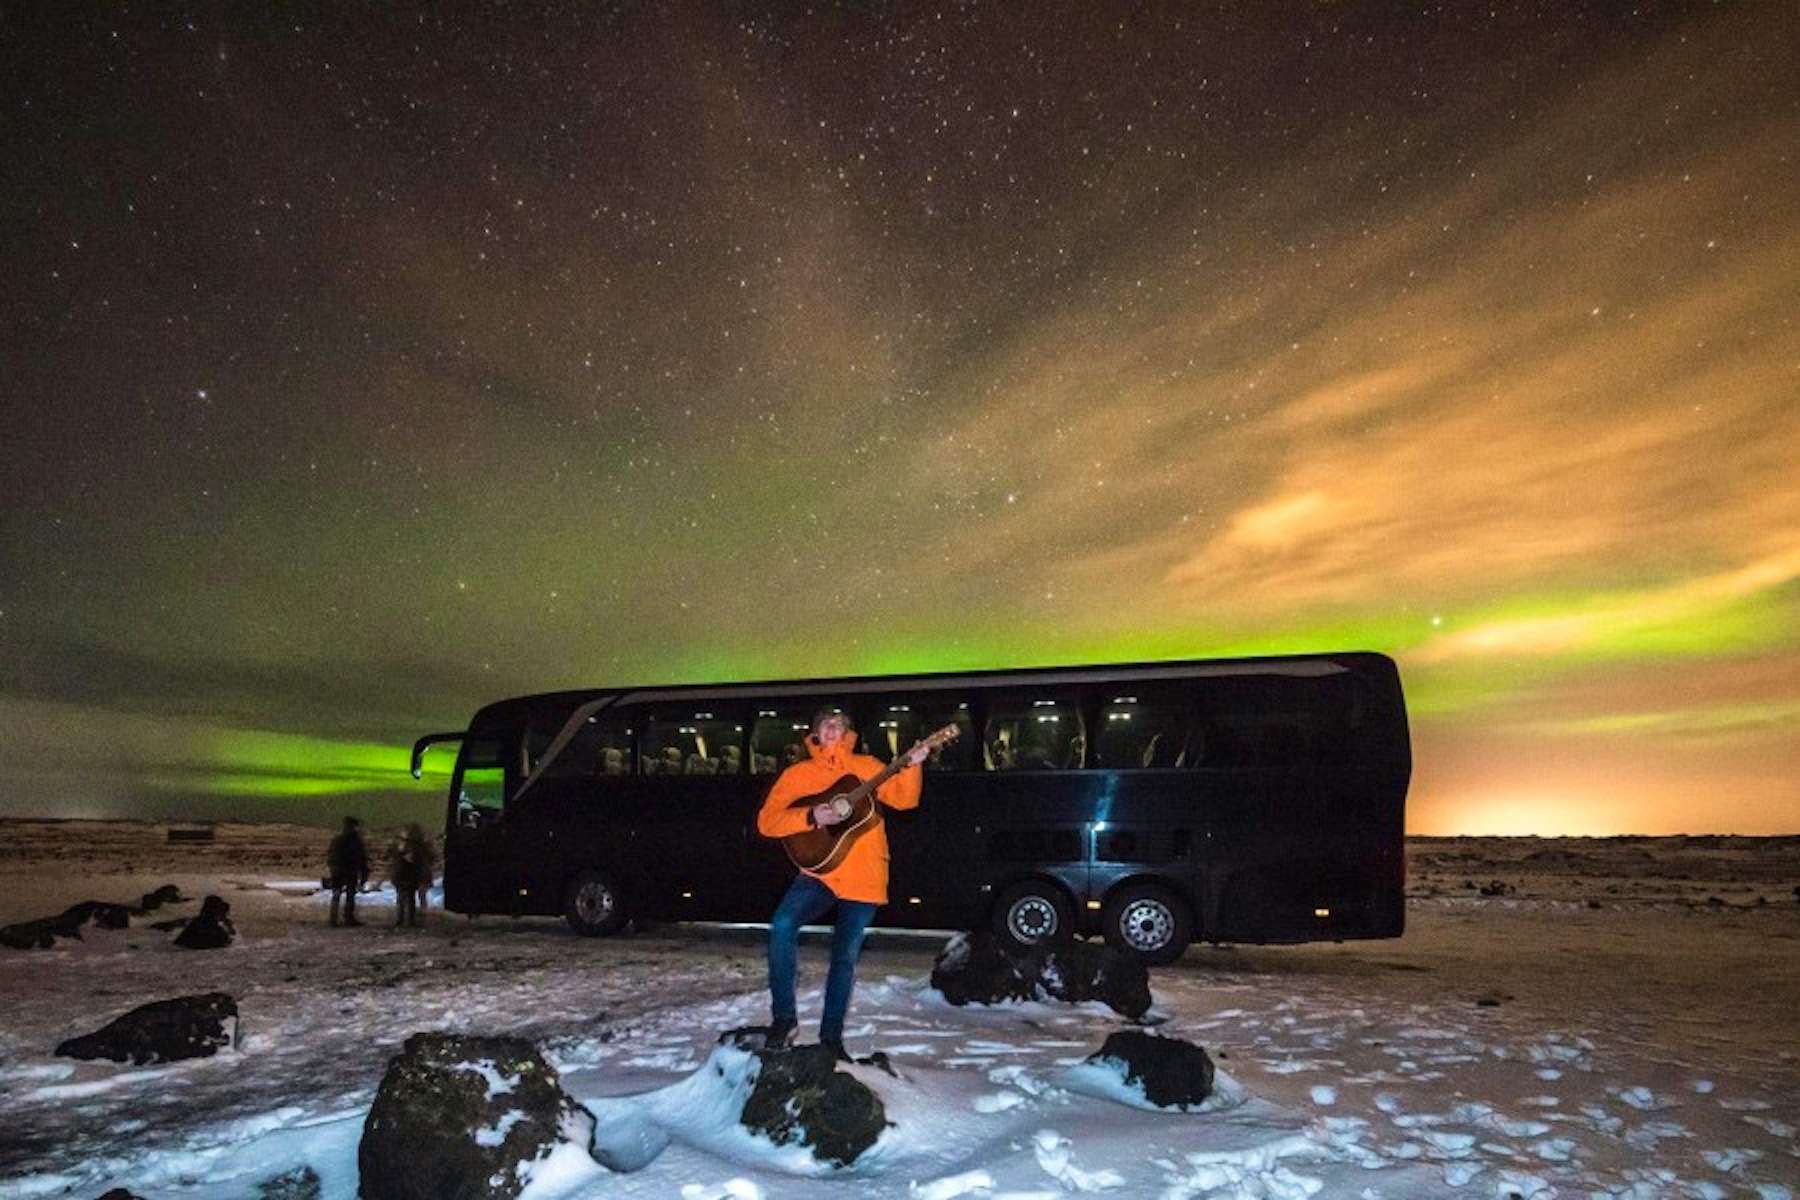 bus travel iceland